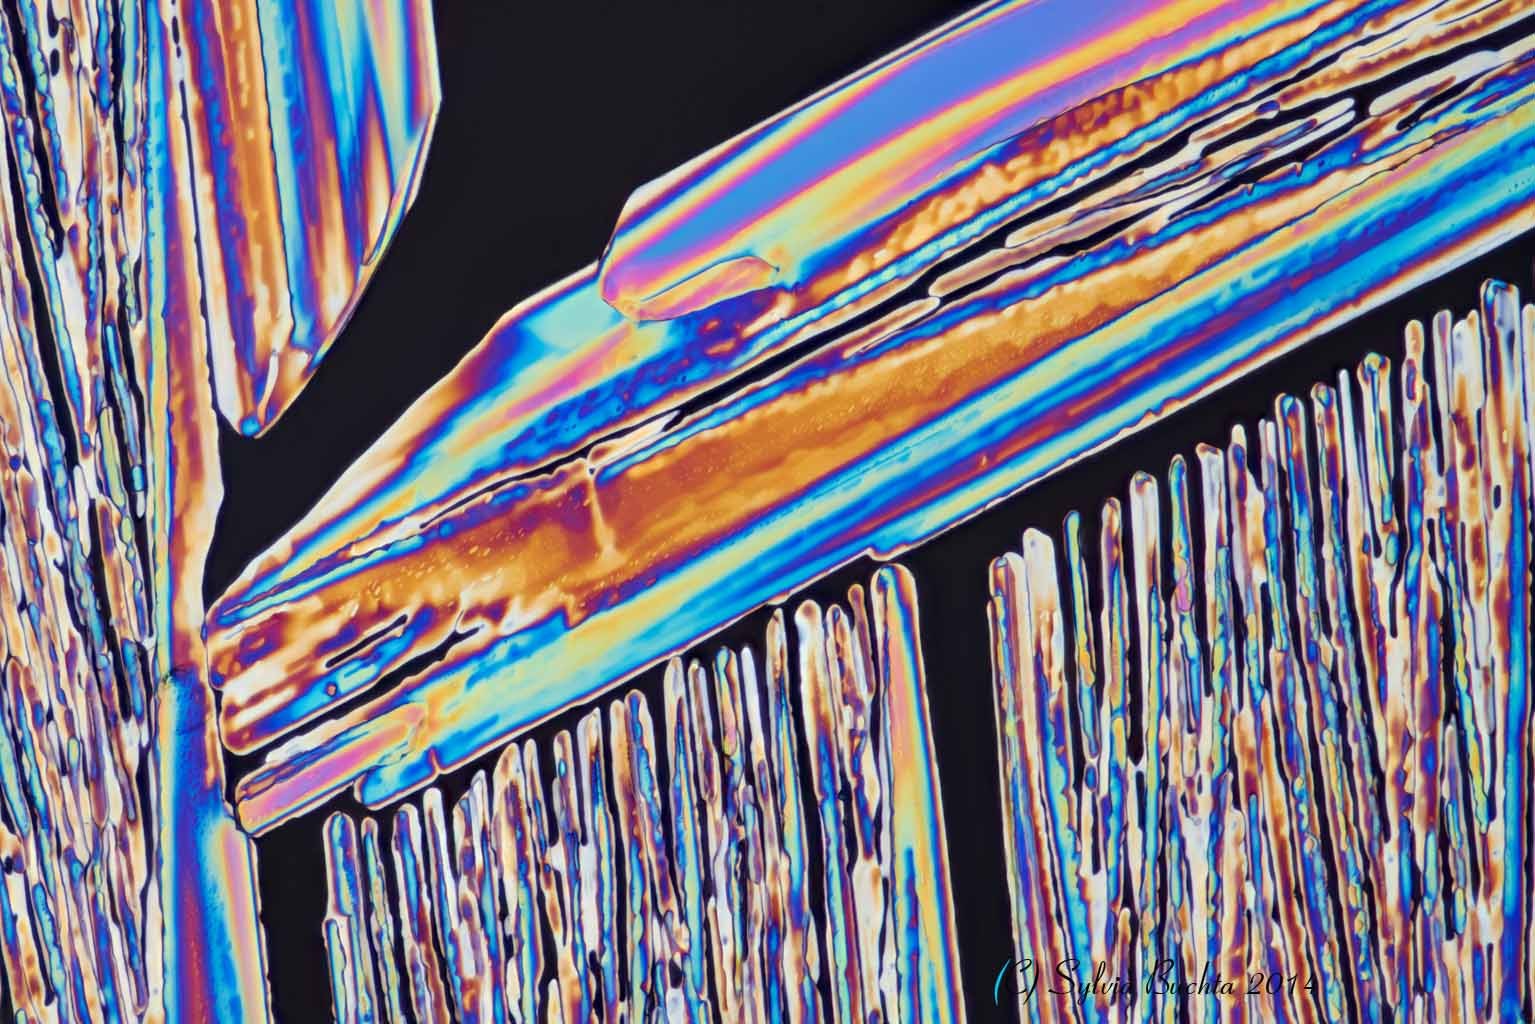 Bild: Natriumacetat, Mikrokristall, Stack am Mikroskop